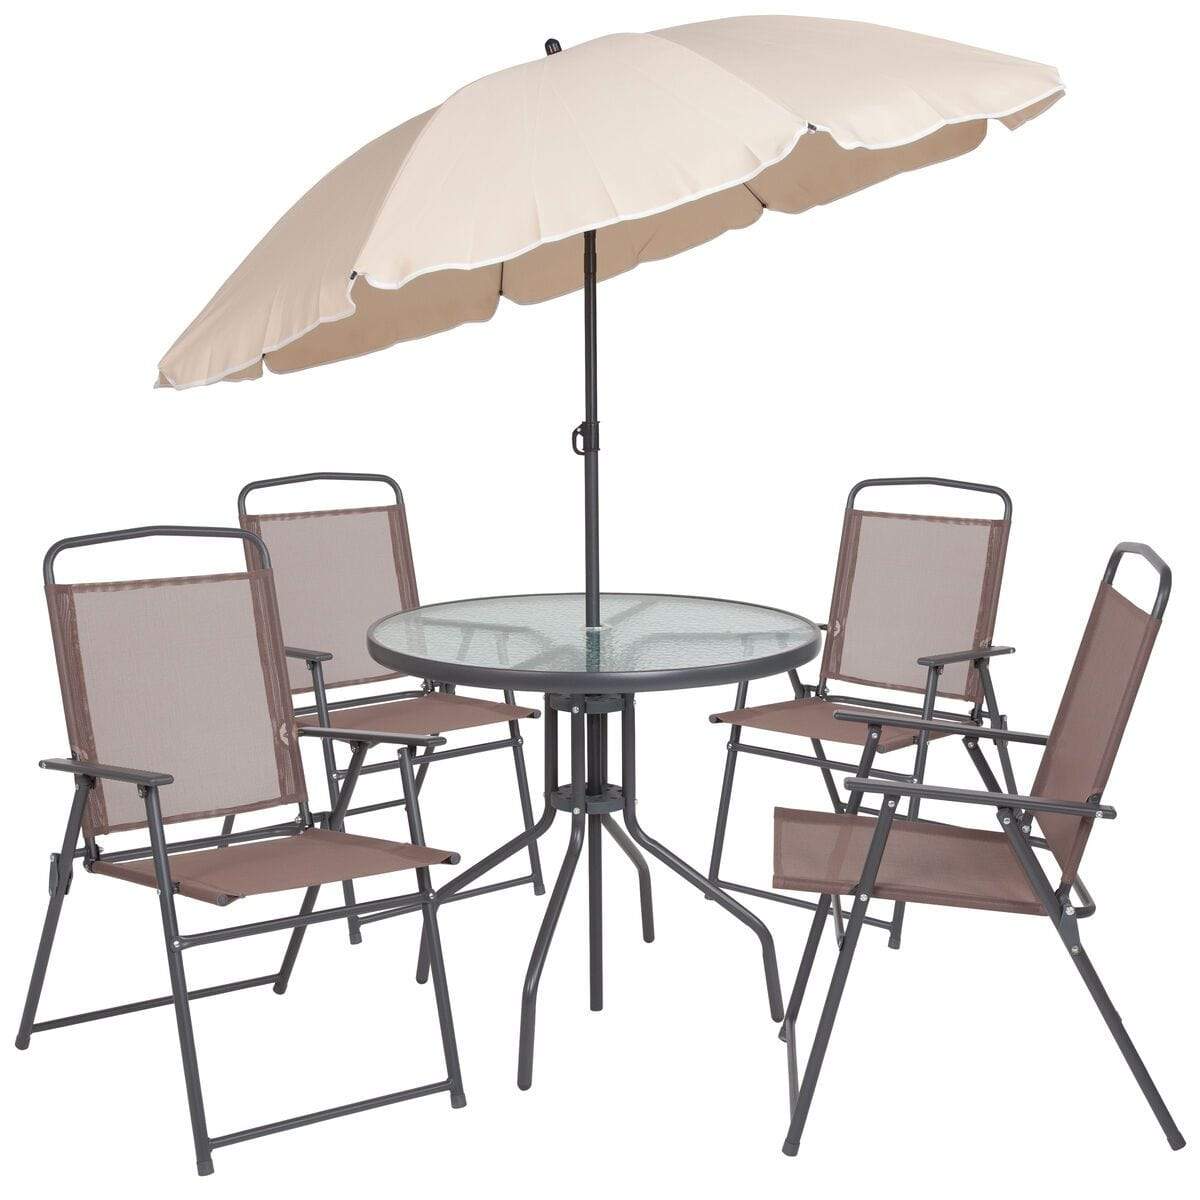 Samuel Norman & Assoc. Furnishings Outdoor Dining Set Samuel Norman & Assoc. Furnishings 6PC Brown Patio Set & Umbrella